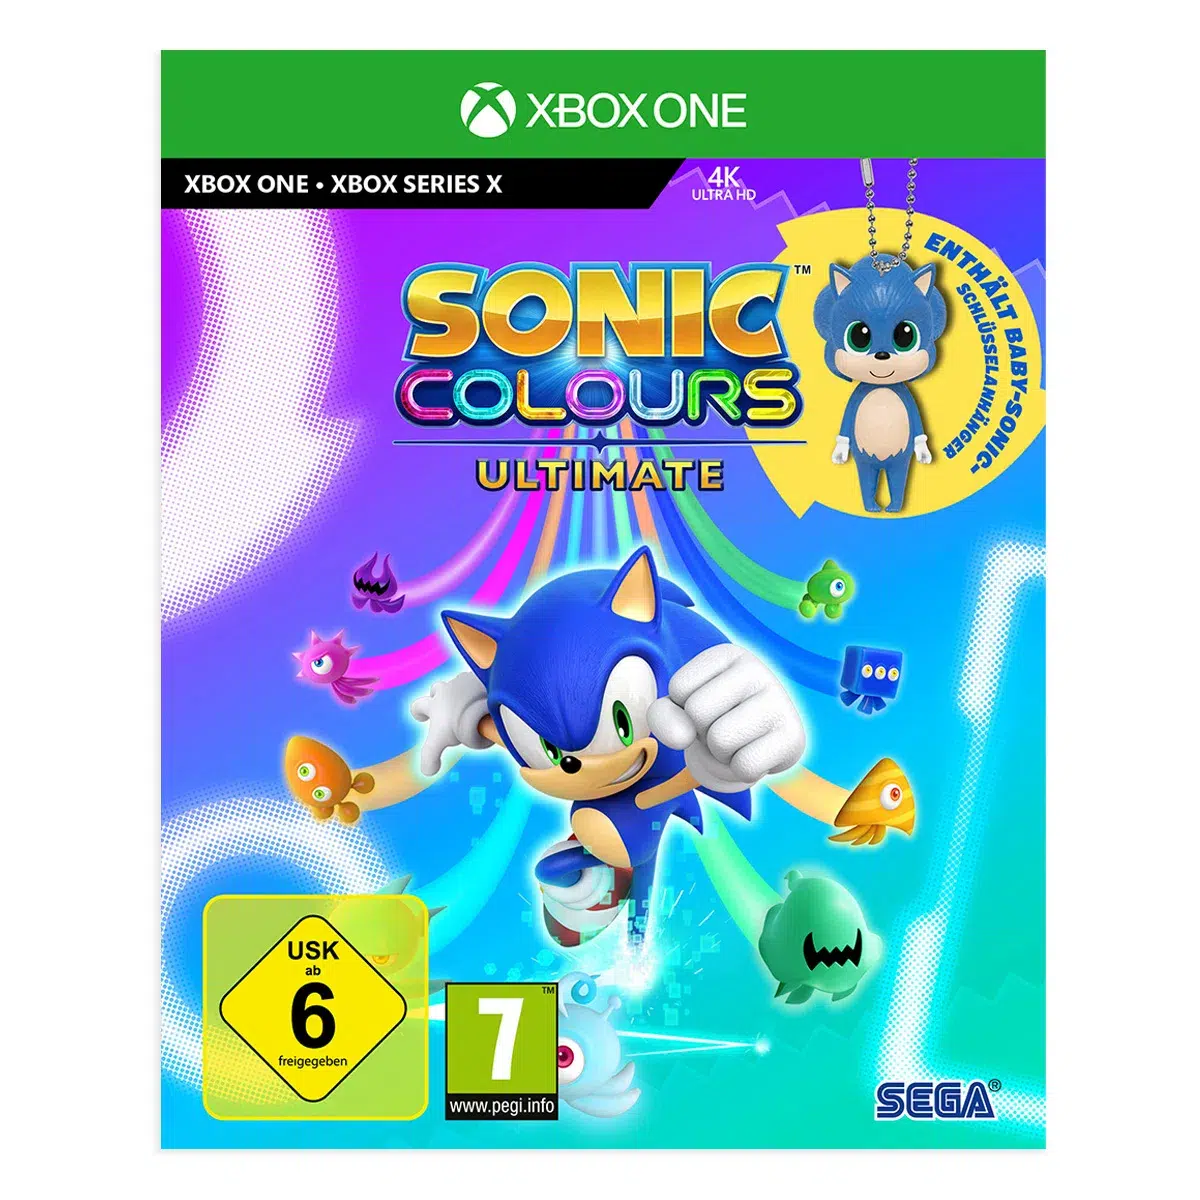 Sonic Colours: Ultimate Launch Edition - XONE